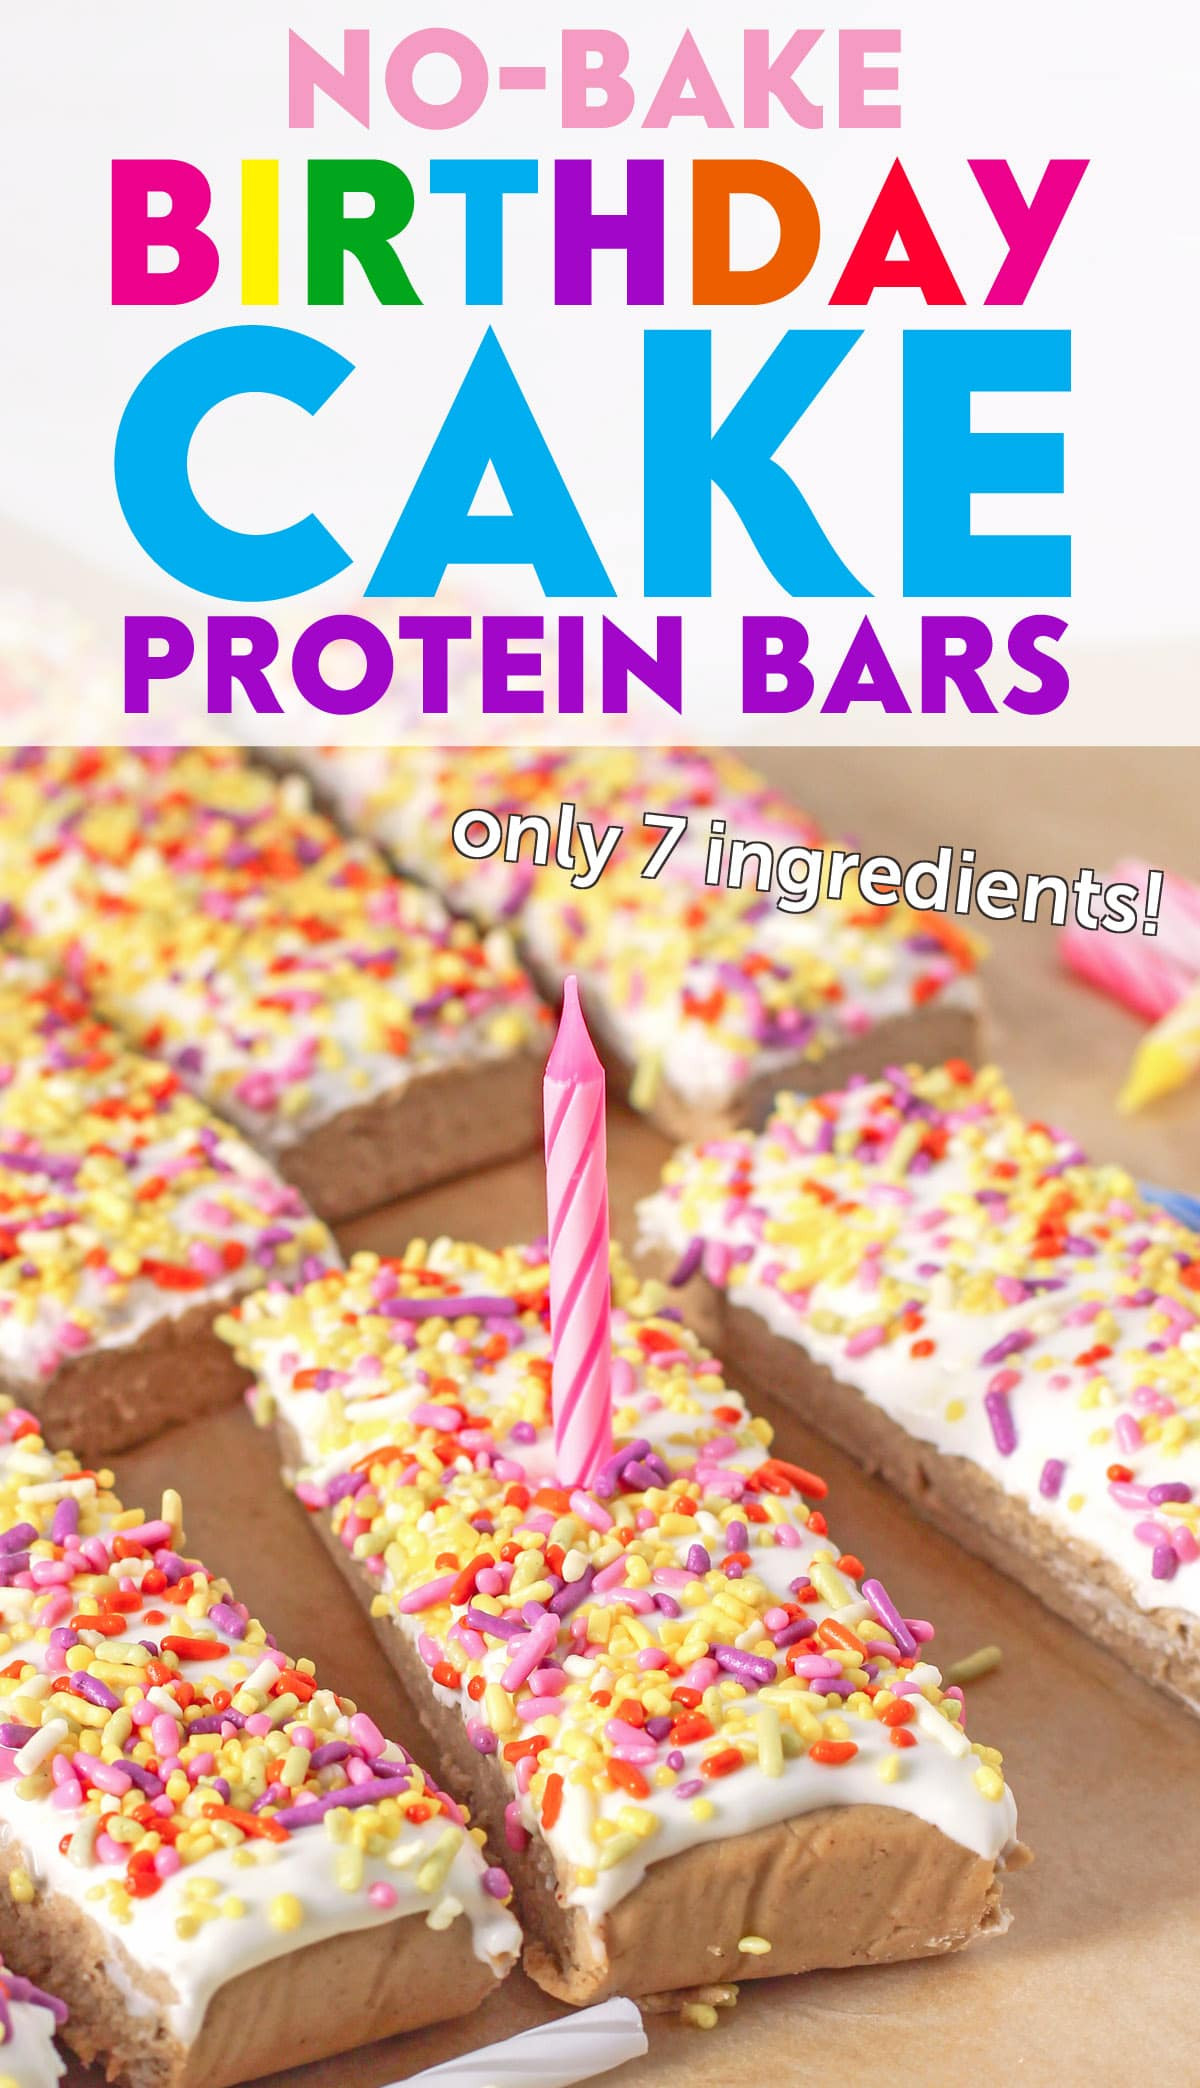 Protein Birthday Cake
 7 ingre nt NO BAKE Birthday Cake Protein Bars gluten